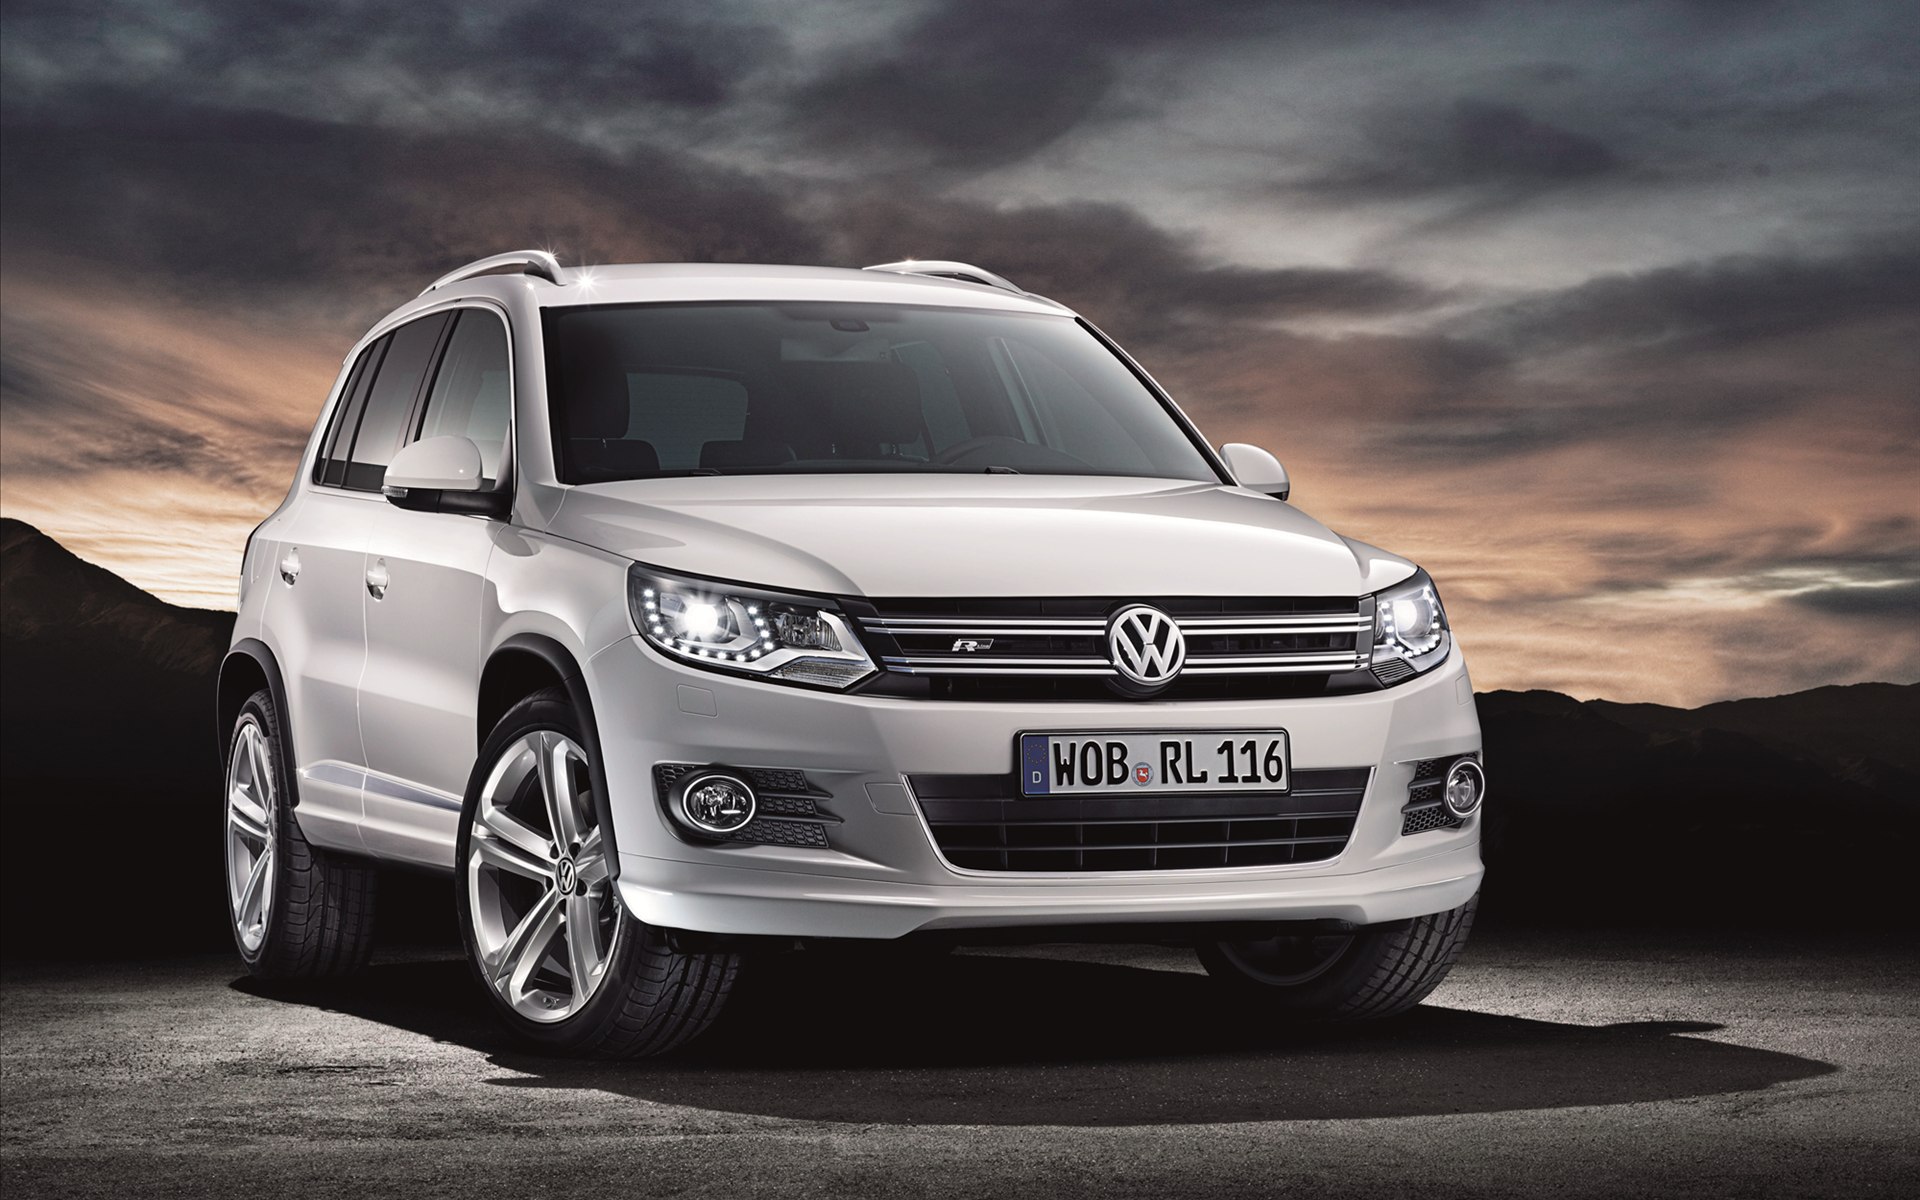 Handy-Wallpaper Transport, Auto, Volkswagen kostenlos herunterladen.